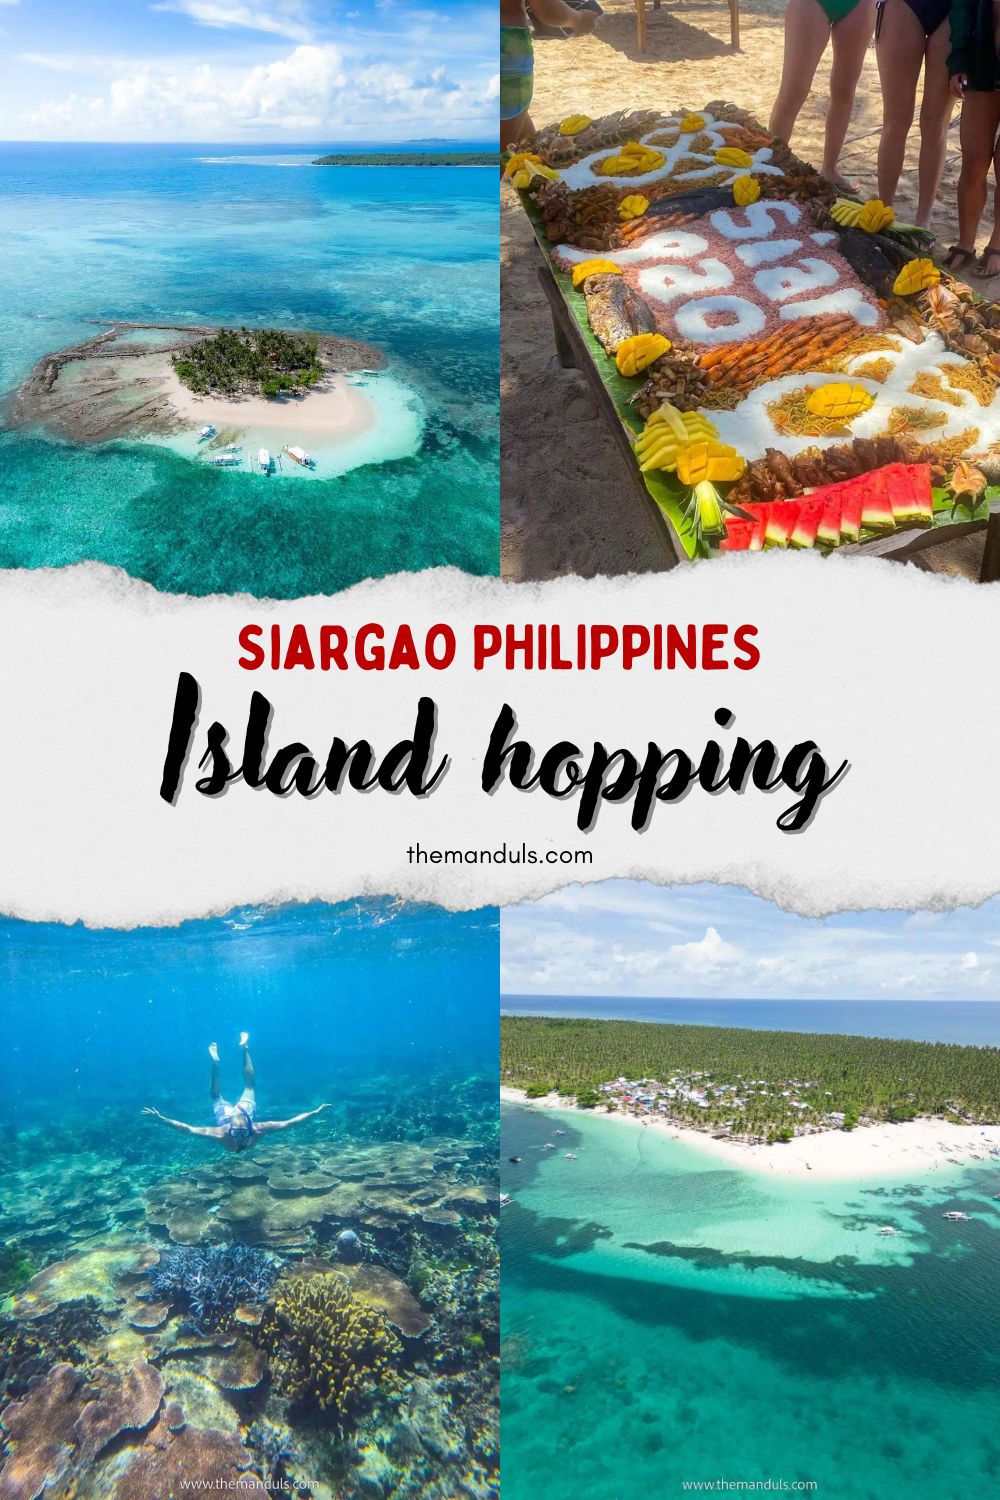 Island hopping Siargao